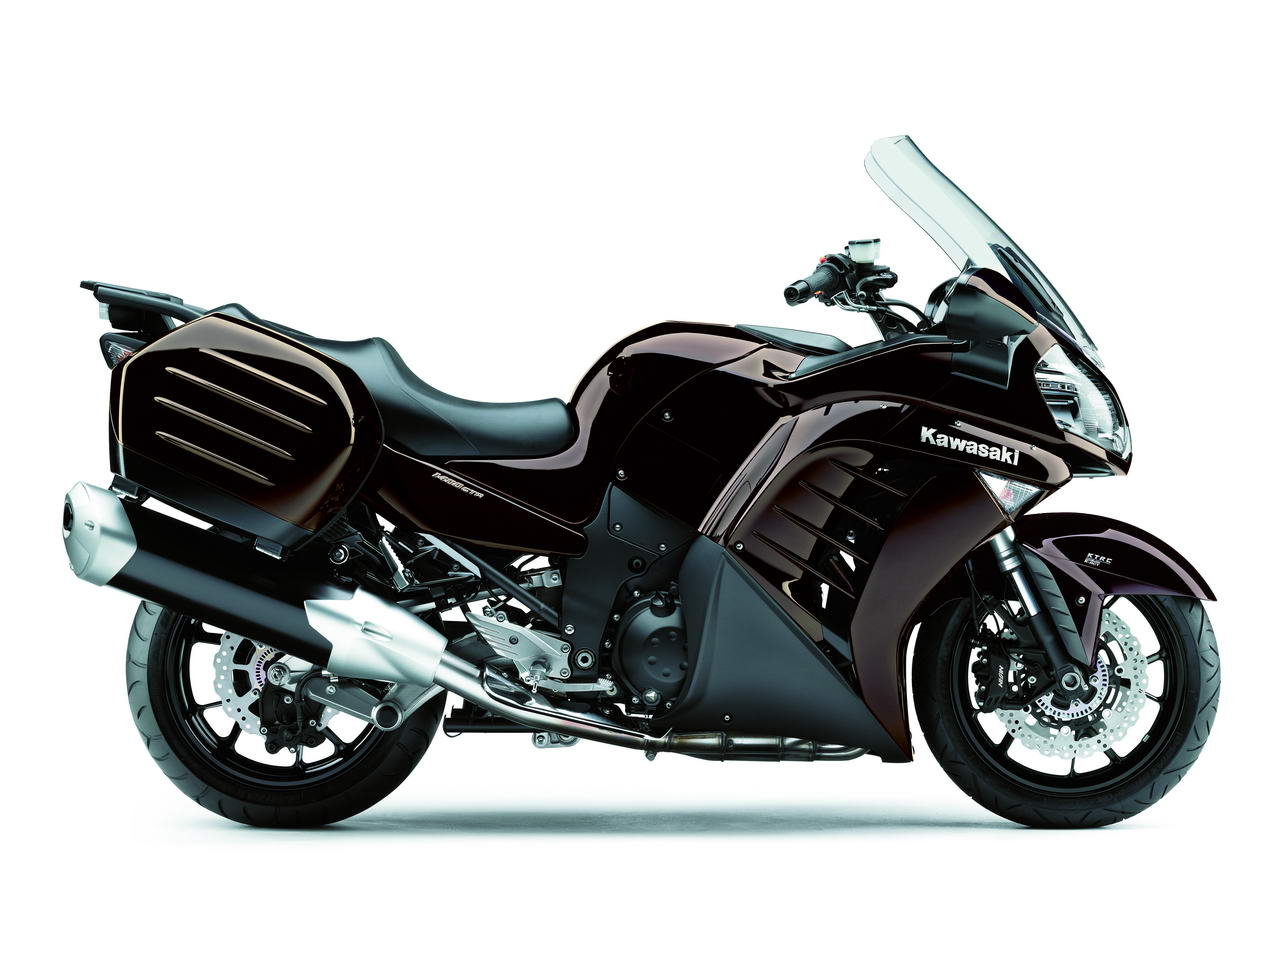 Kawasaki Ninja 400 - Street born, track inspired - image 15498_kawasaki-1400gtr on https://moto.motori.net